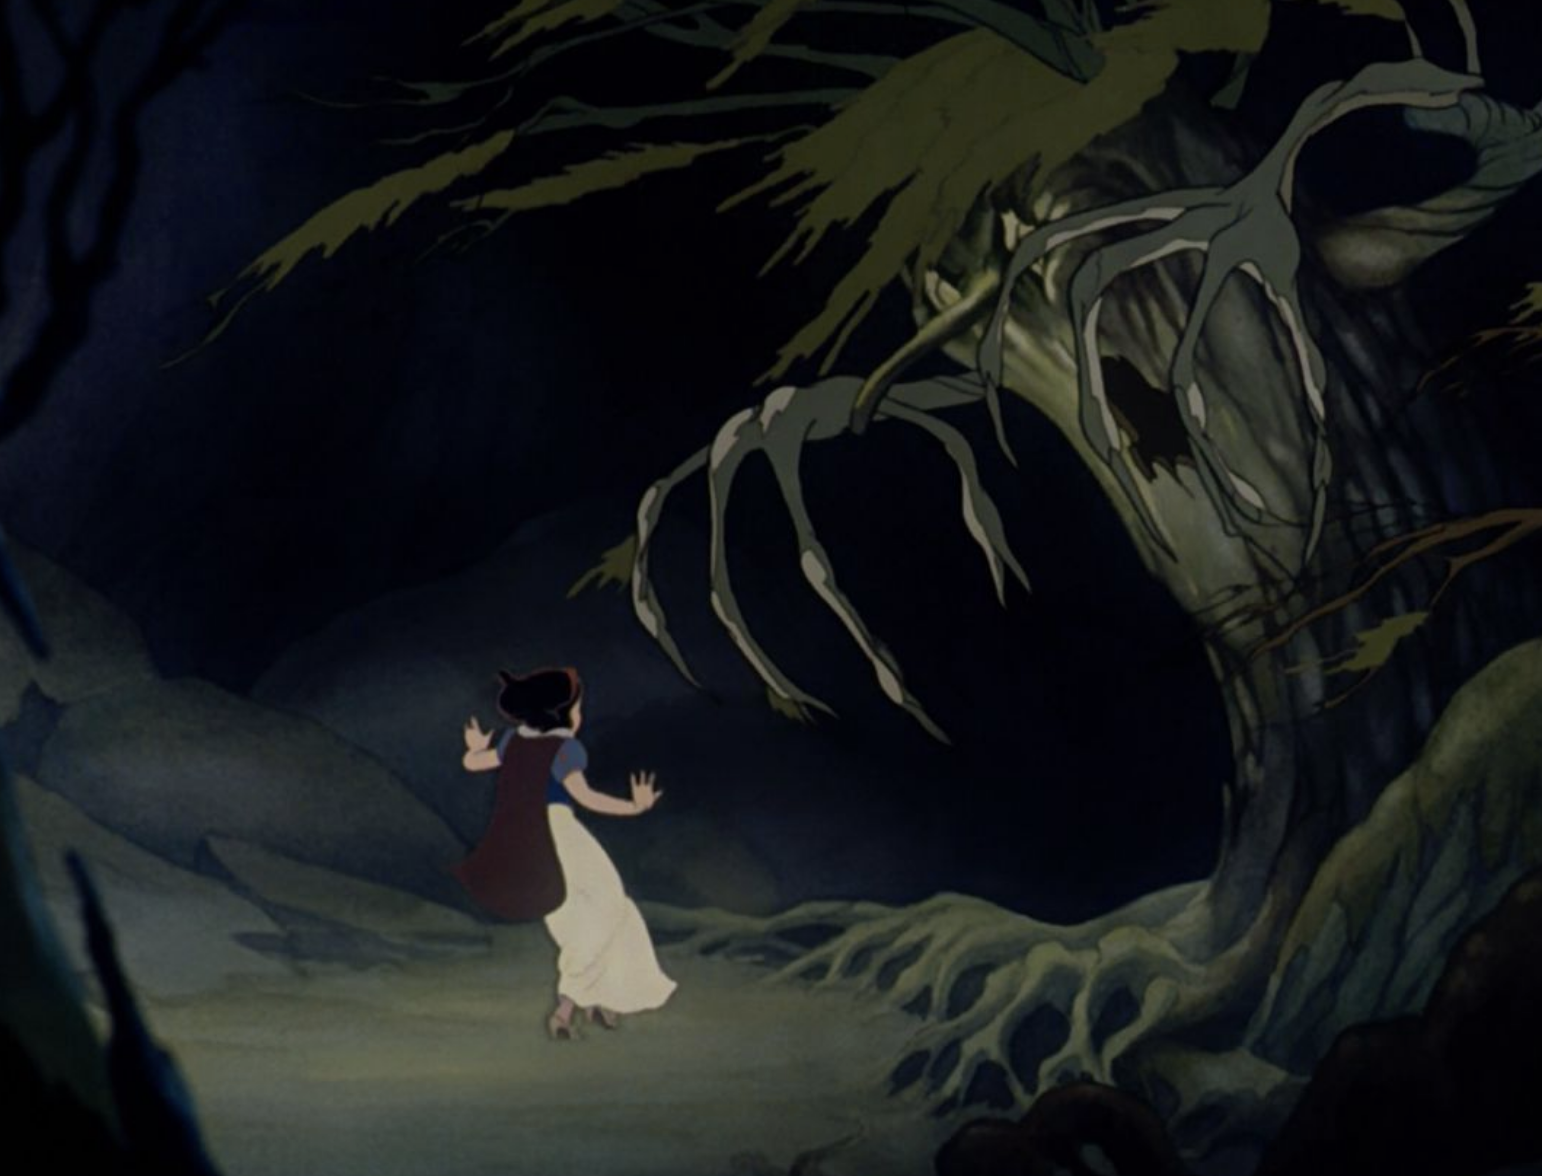 snow white entering the dark woods